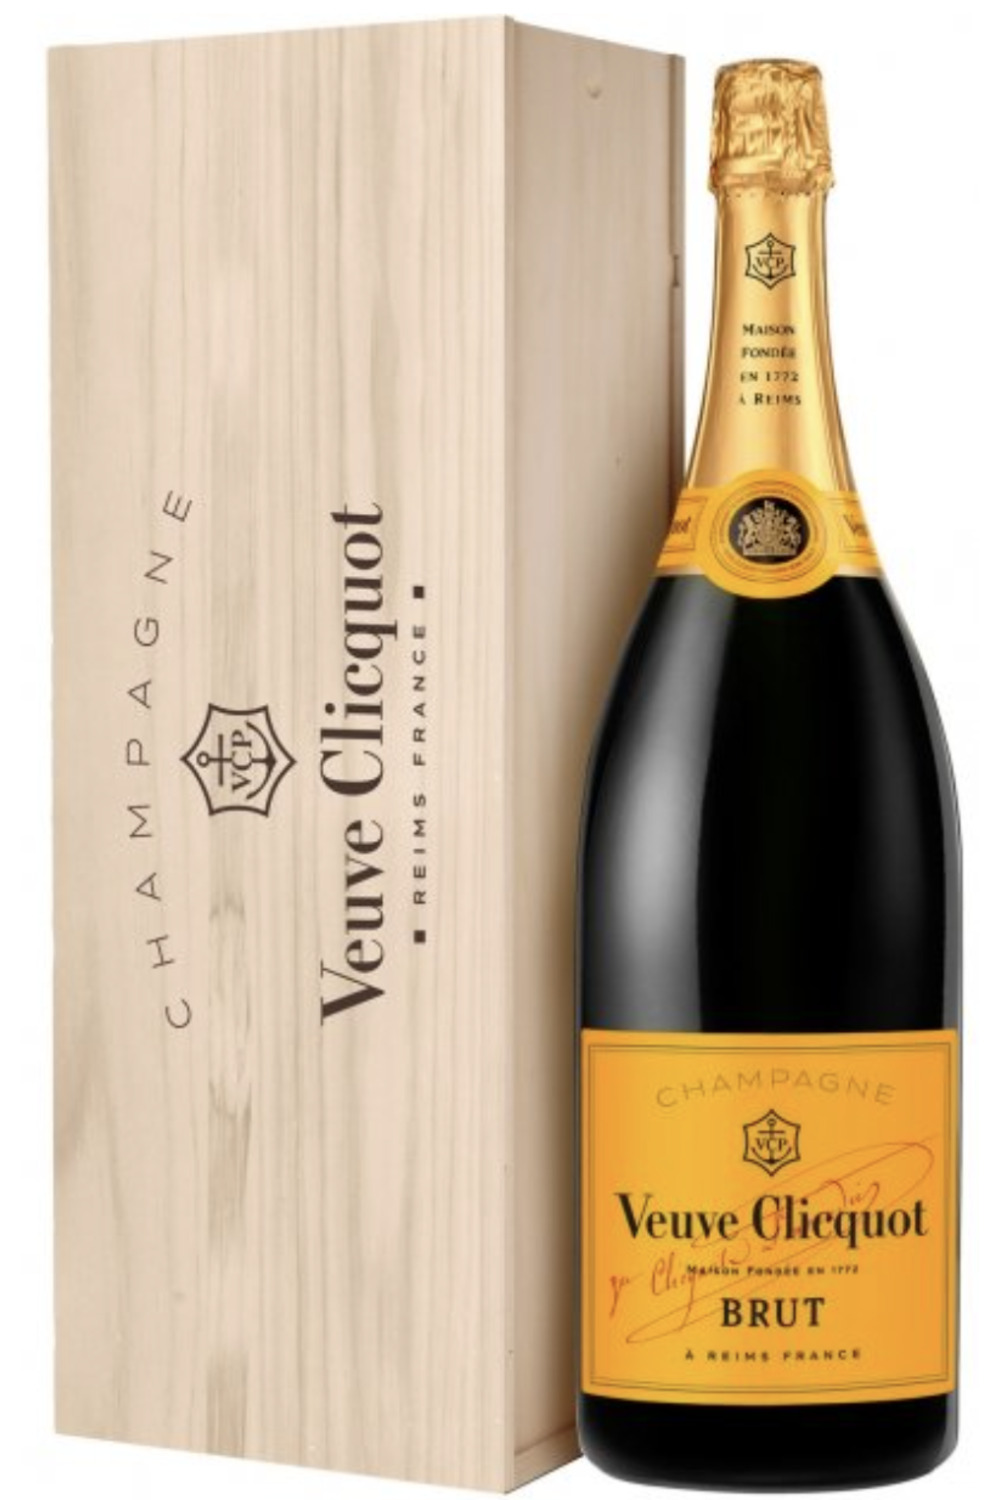 Veuve Clicquot Brut Jeroboam - Brut de Champ - Acheter Veuve Clicquot